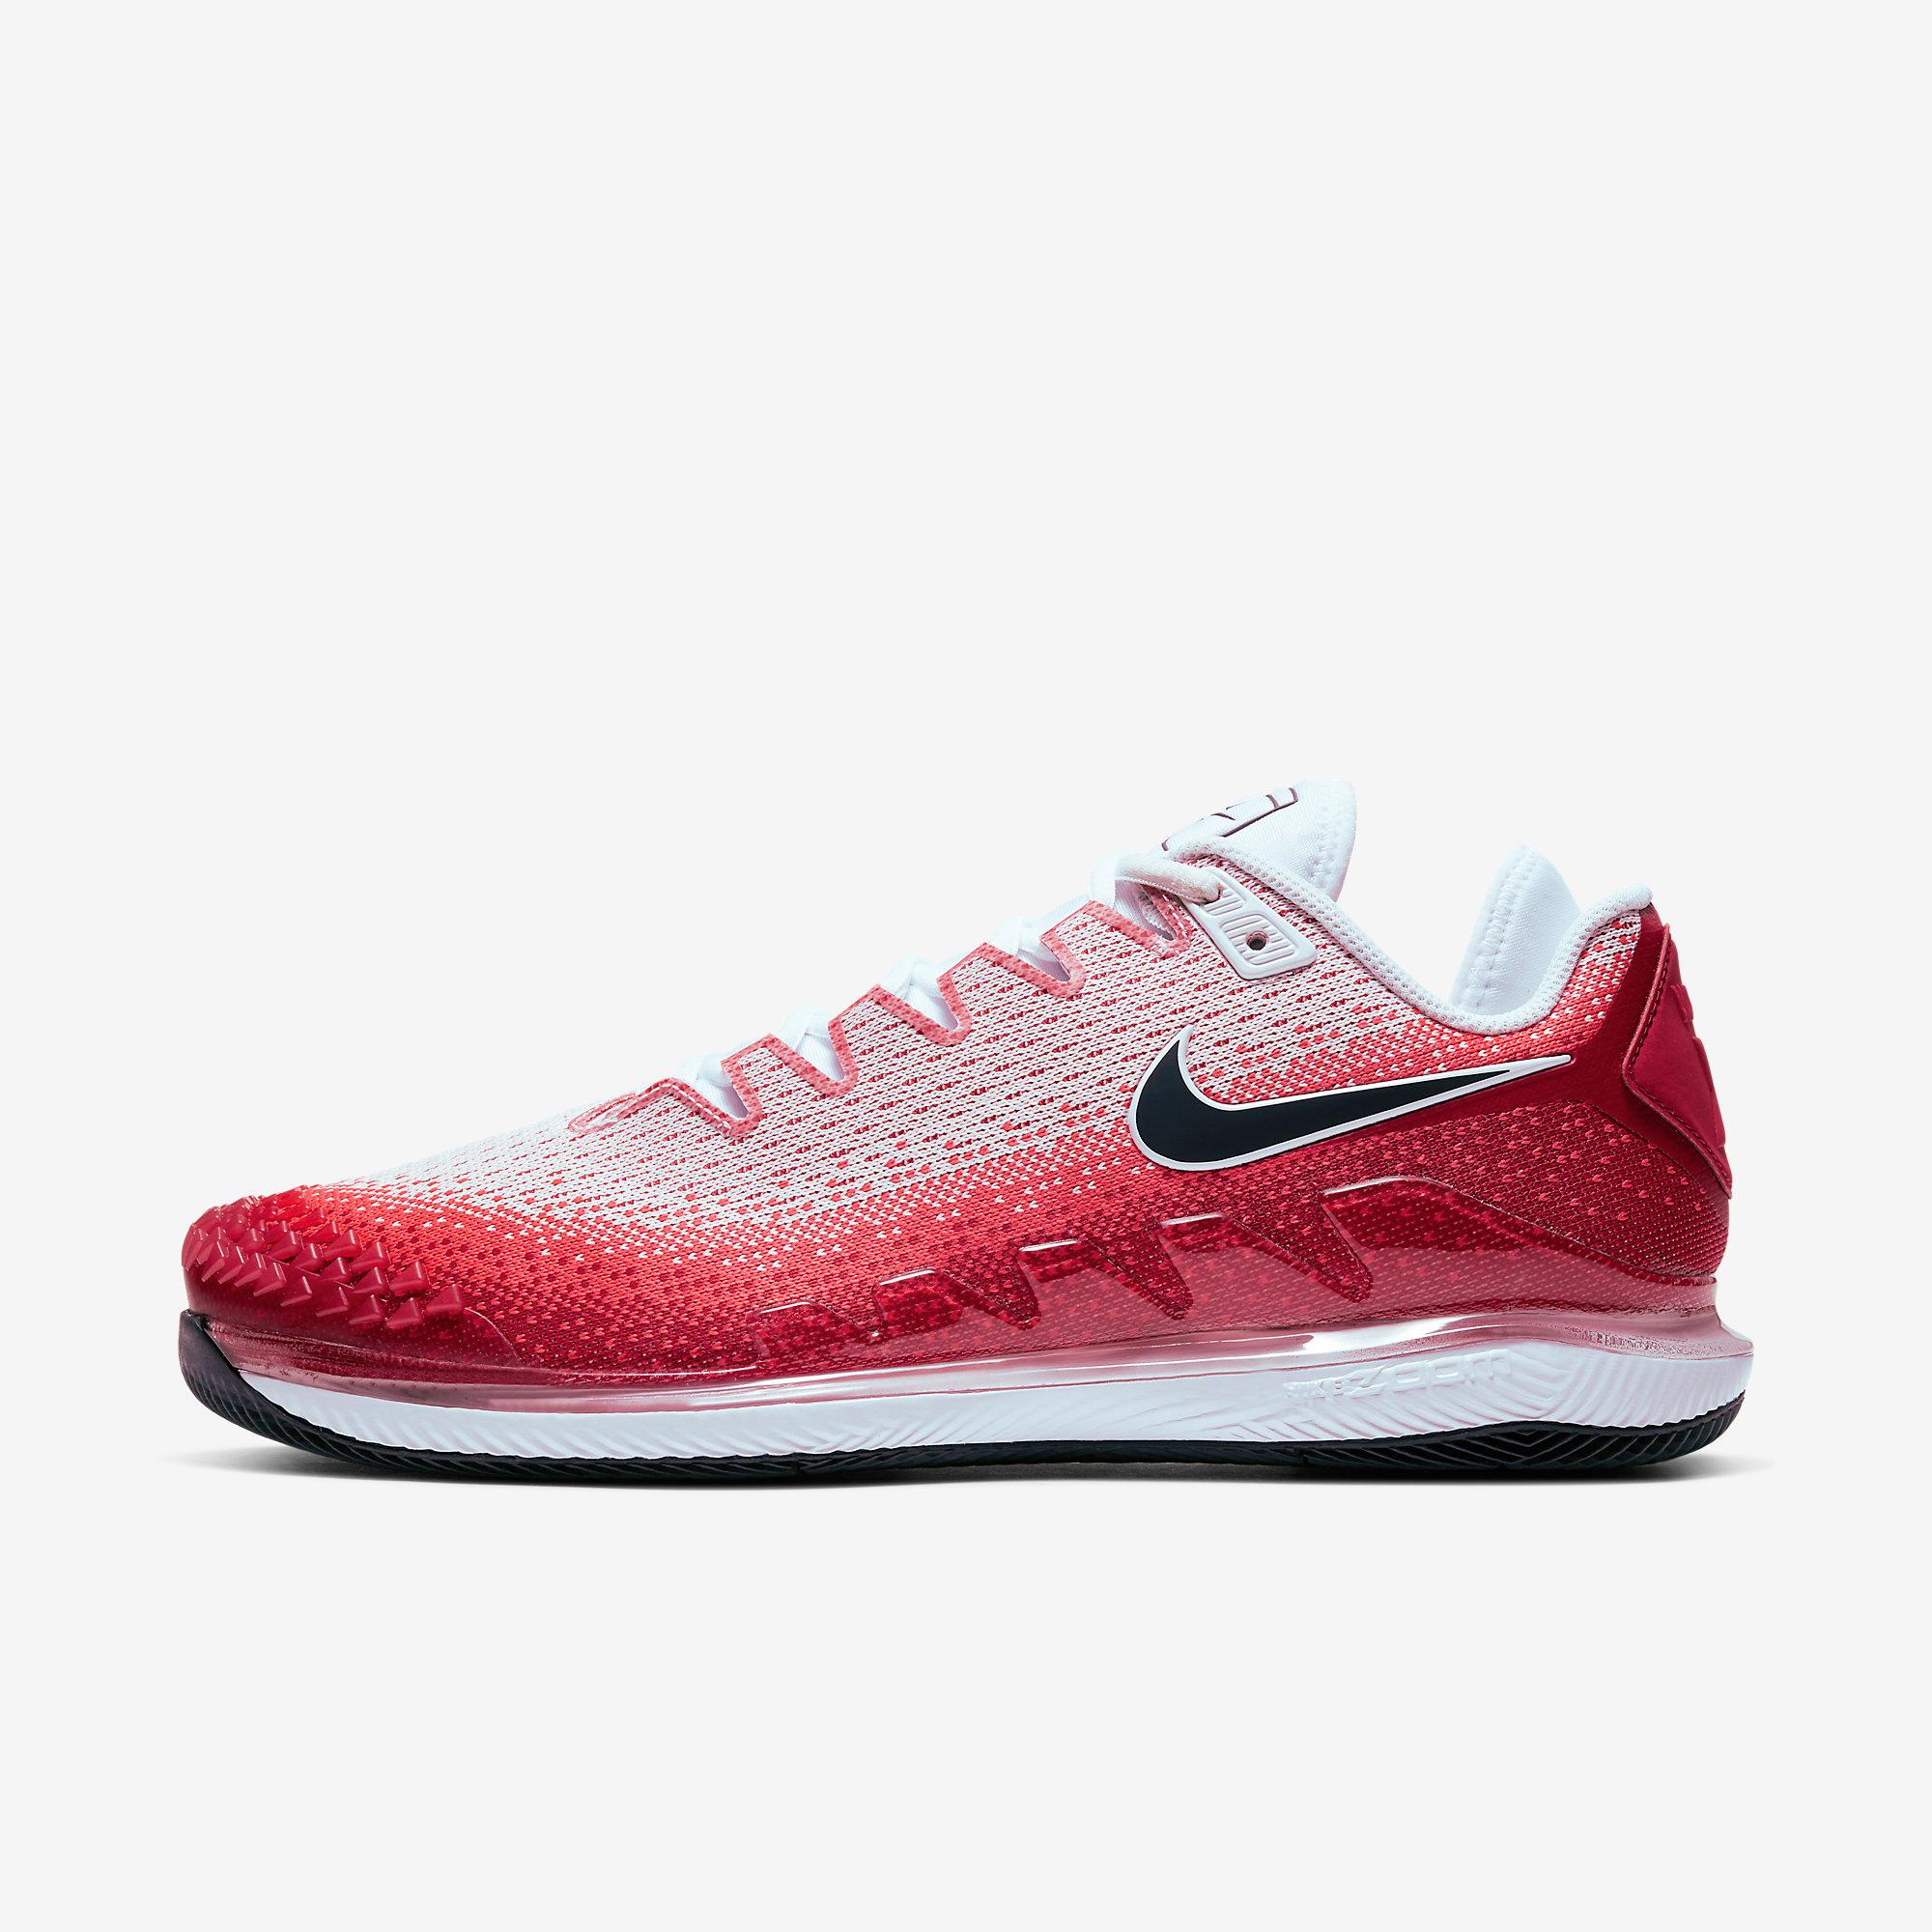 Nike Mens Air Zoom Vapor X Knit Tennis Shoes - Red/White - Tennisnuts.com